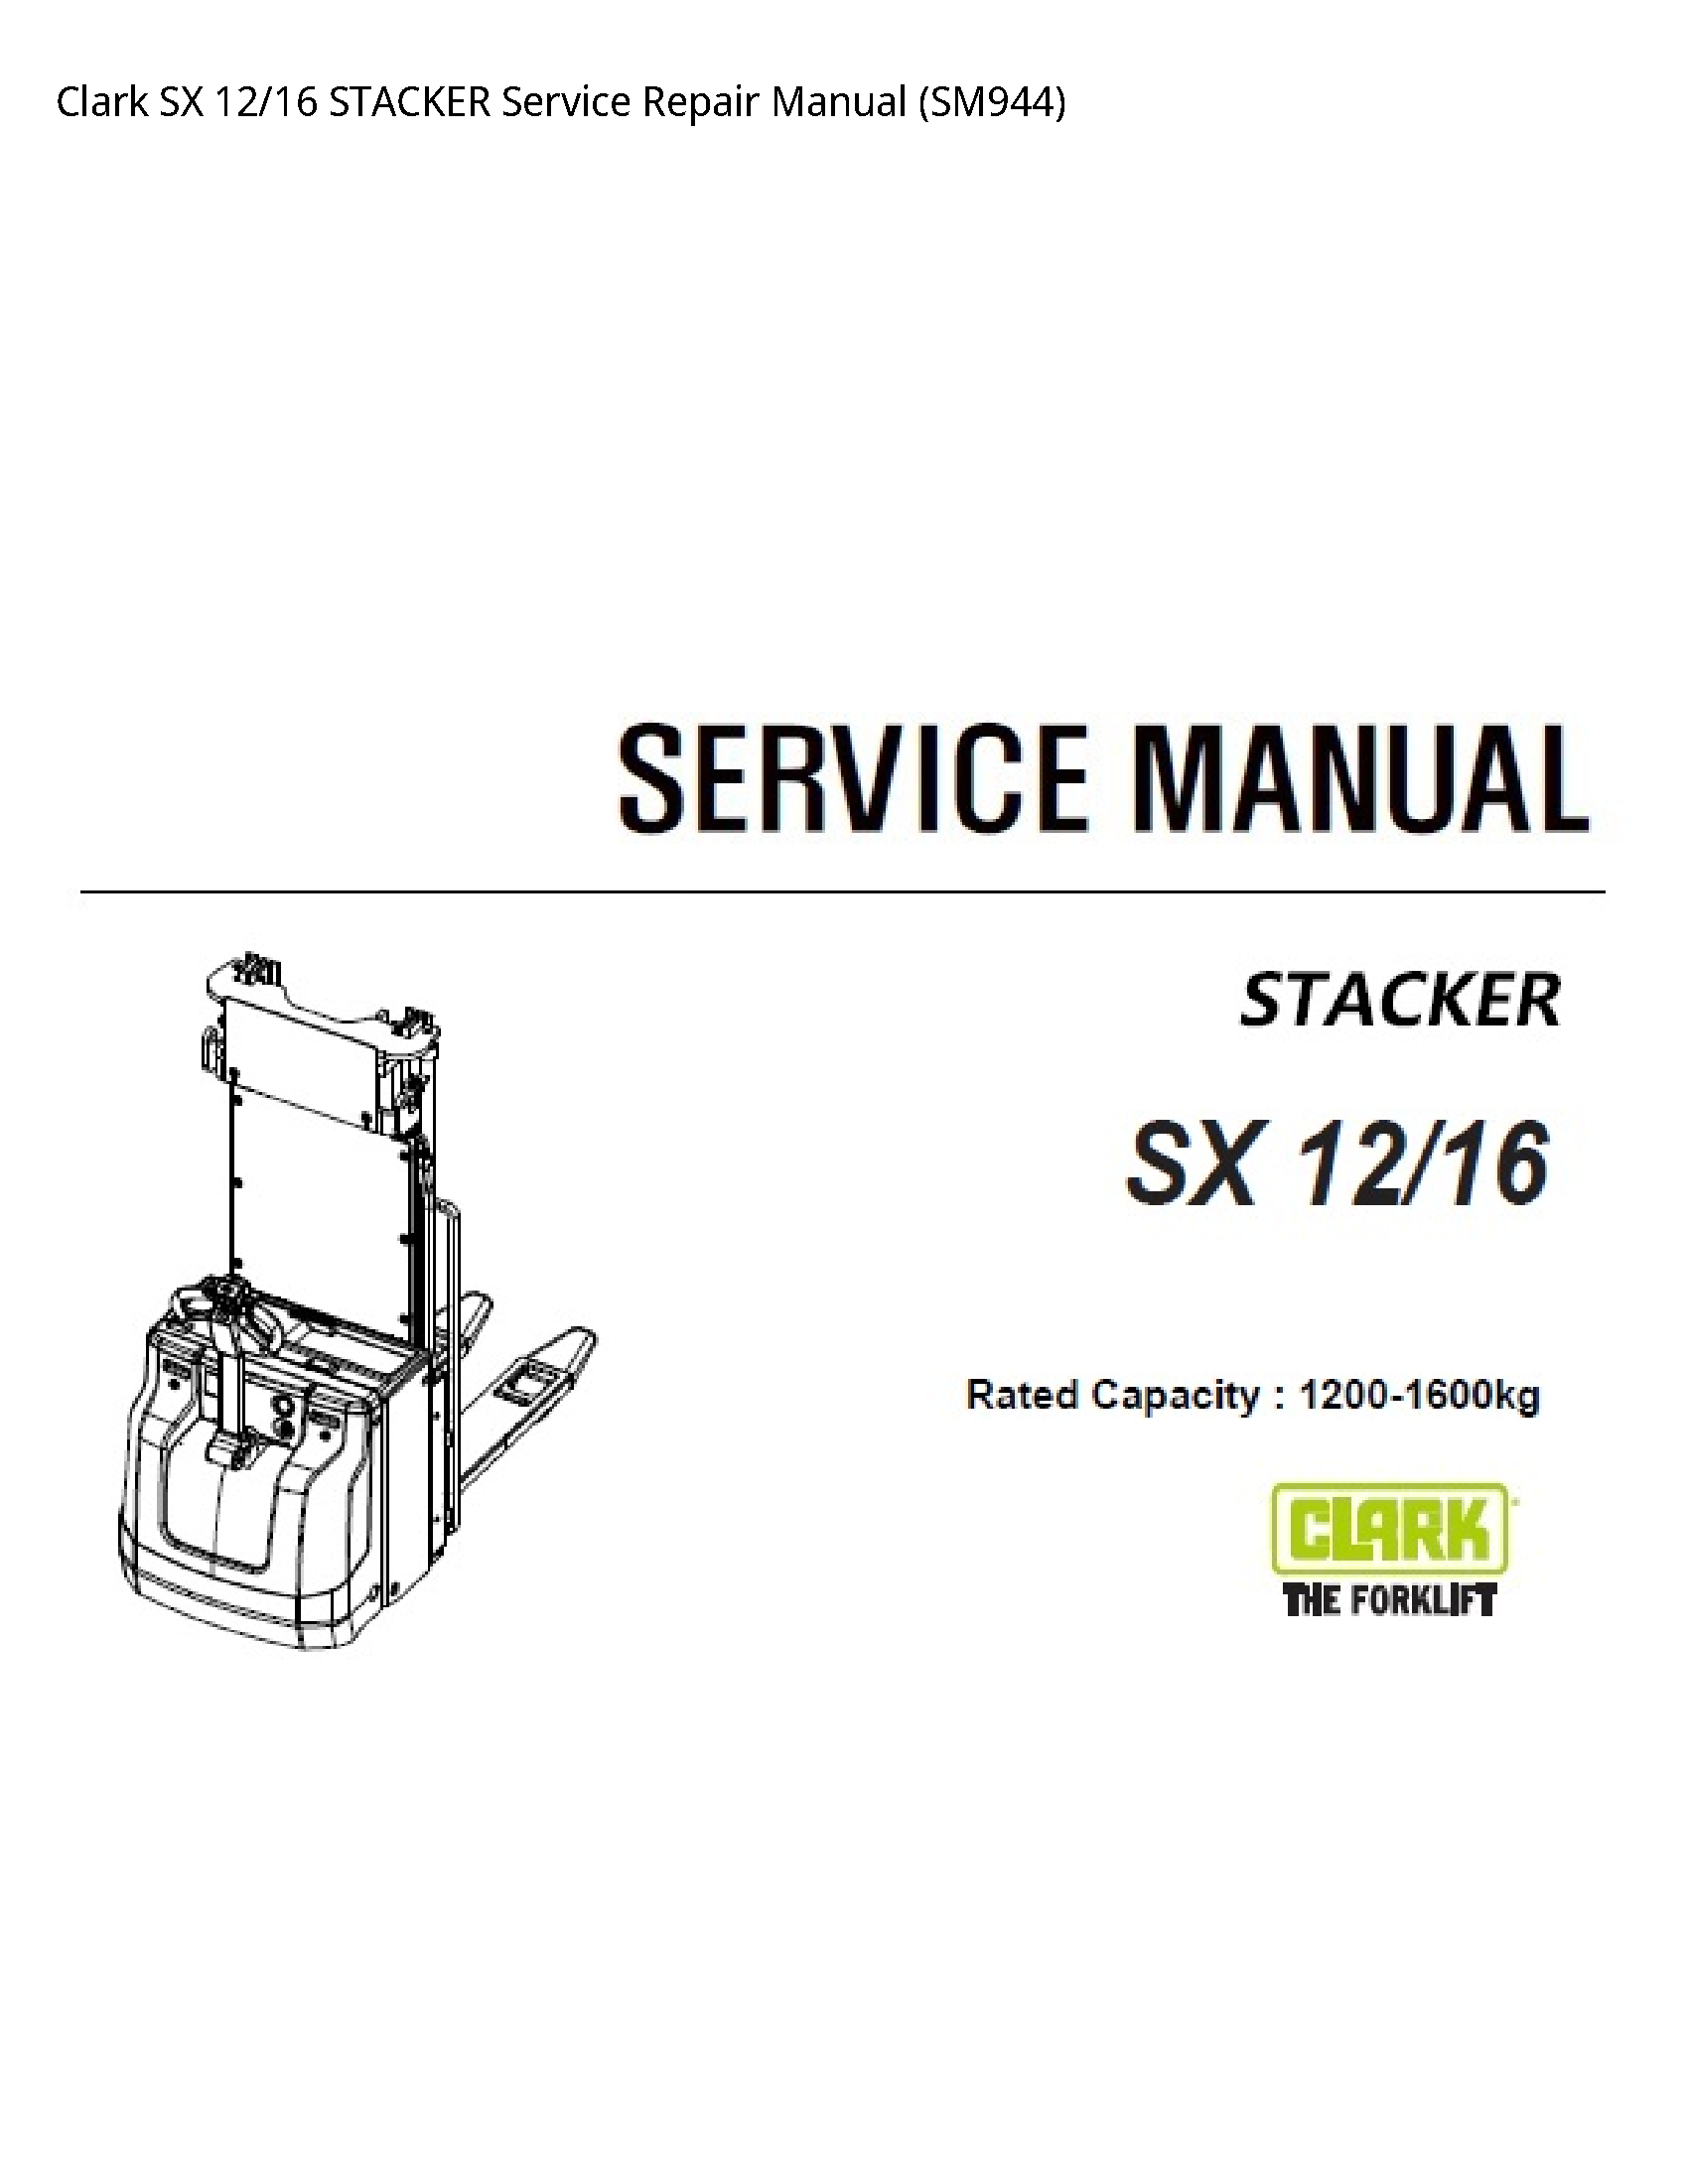 Clark 12 SX STACKER manual